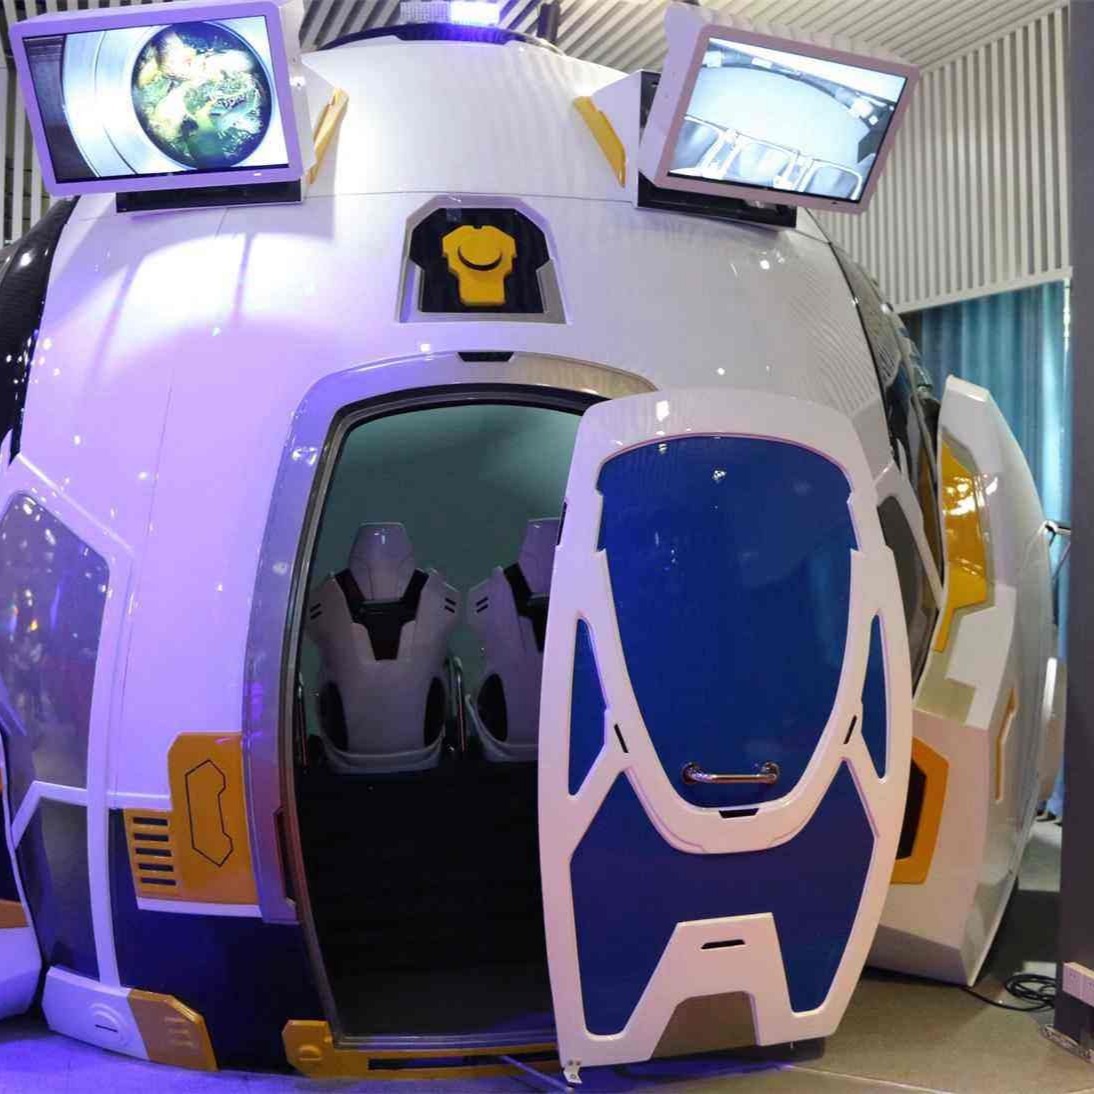 VR太空舱 大型娱乐暖场互动设备 高端科技道具租赁 虚拟世界互动 娱乐暖场互动